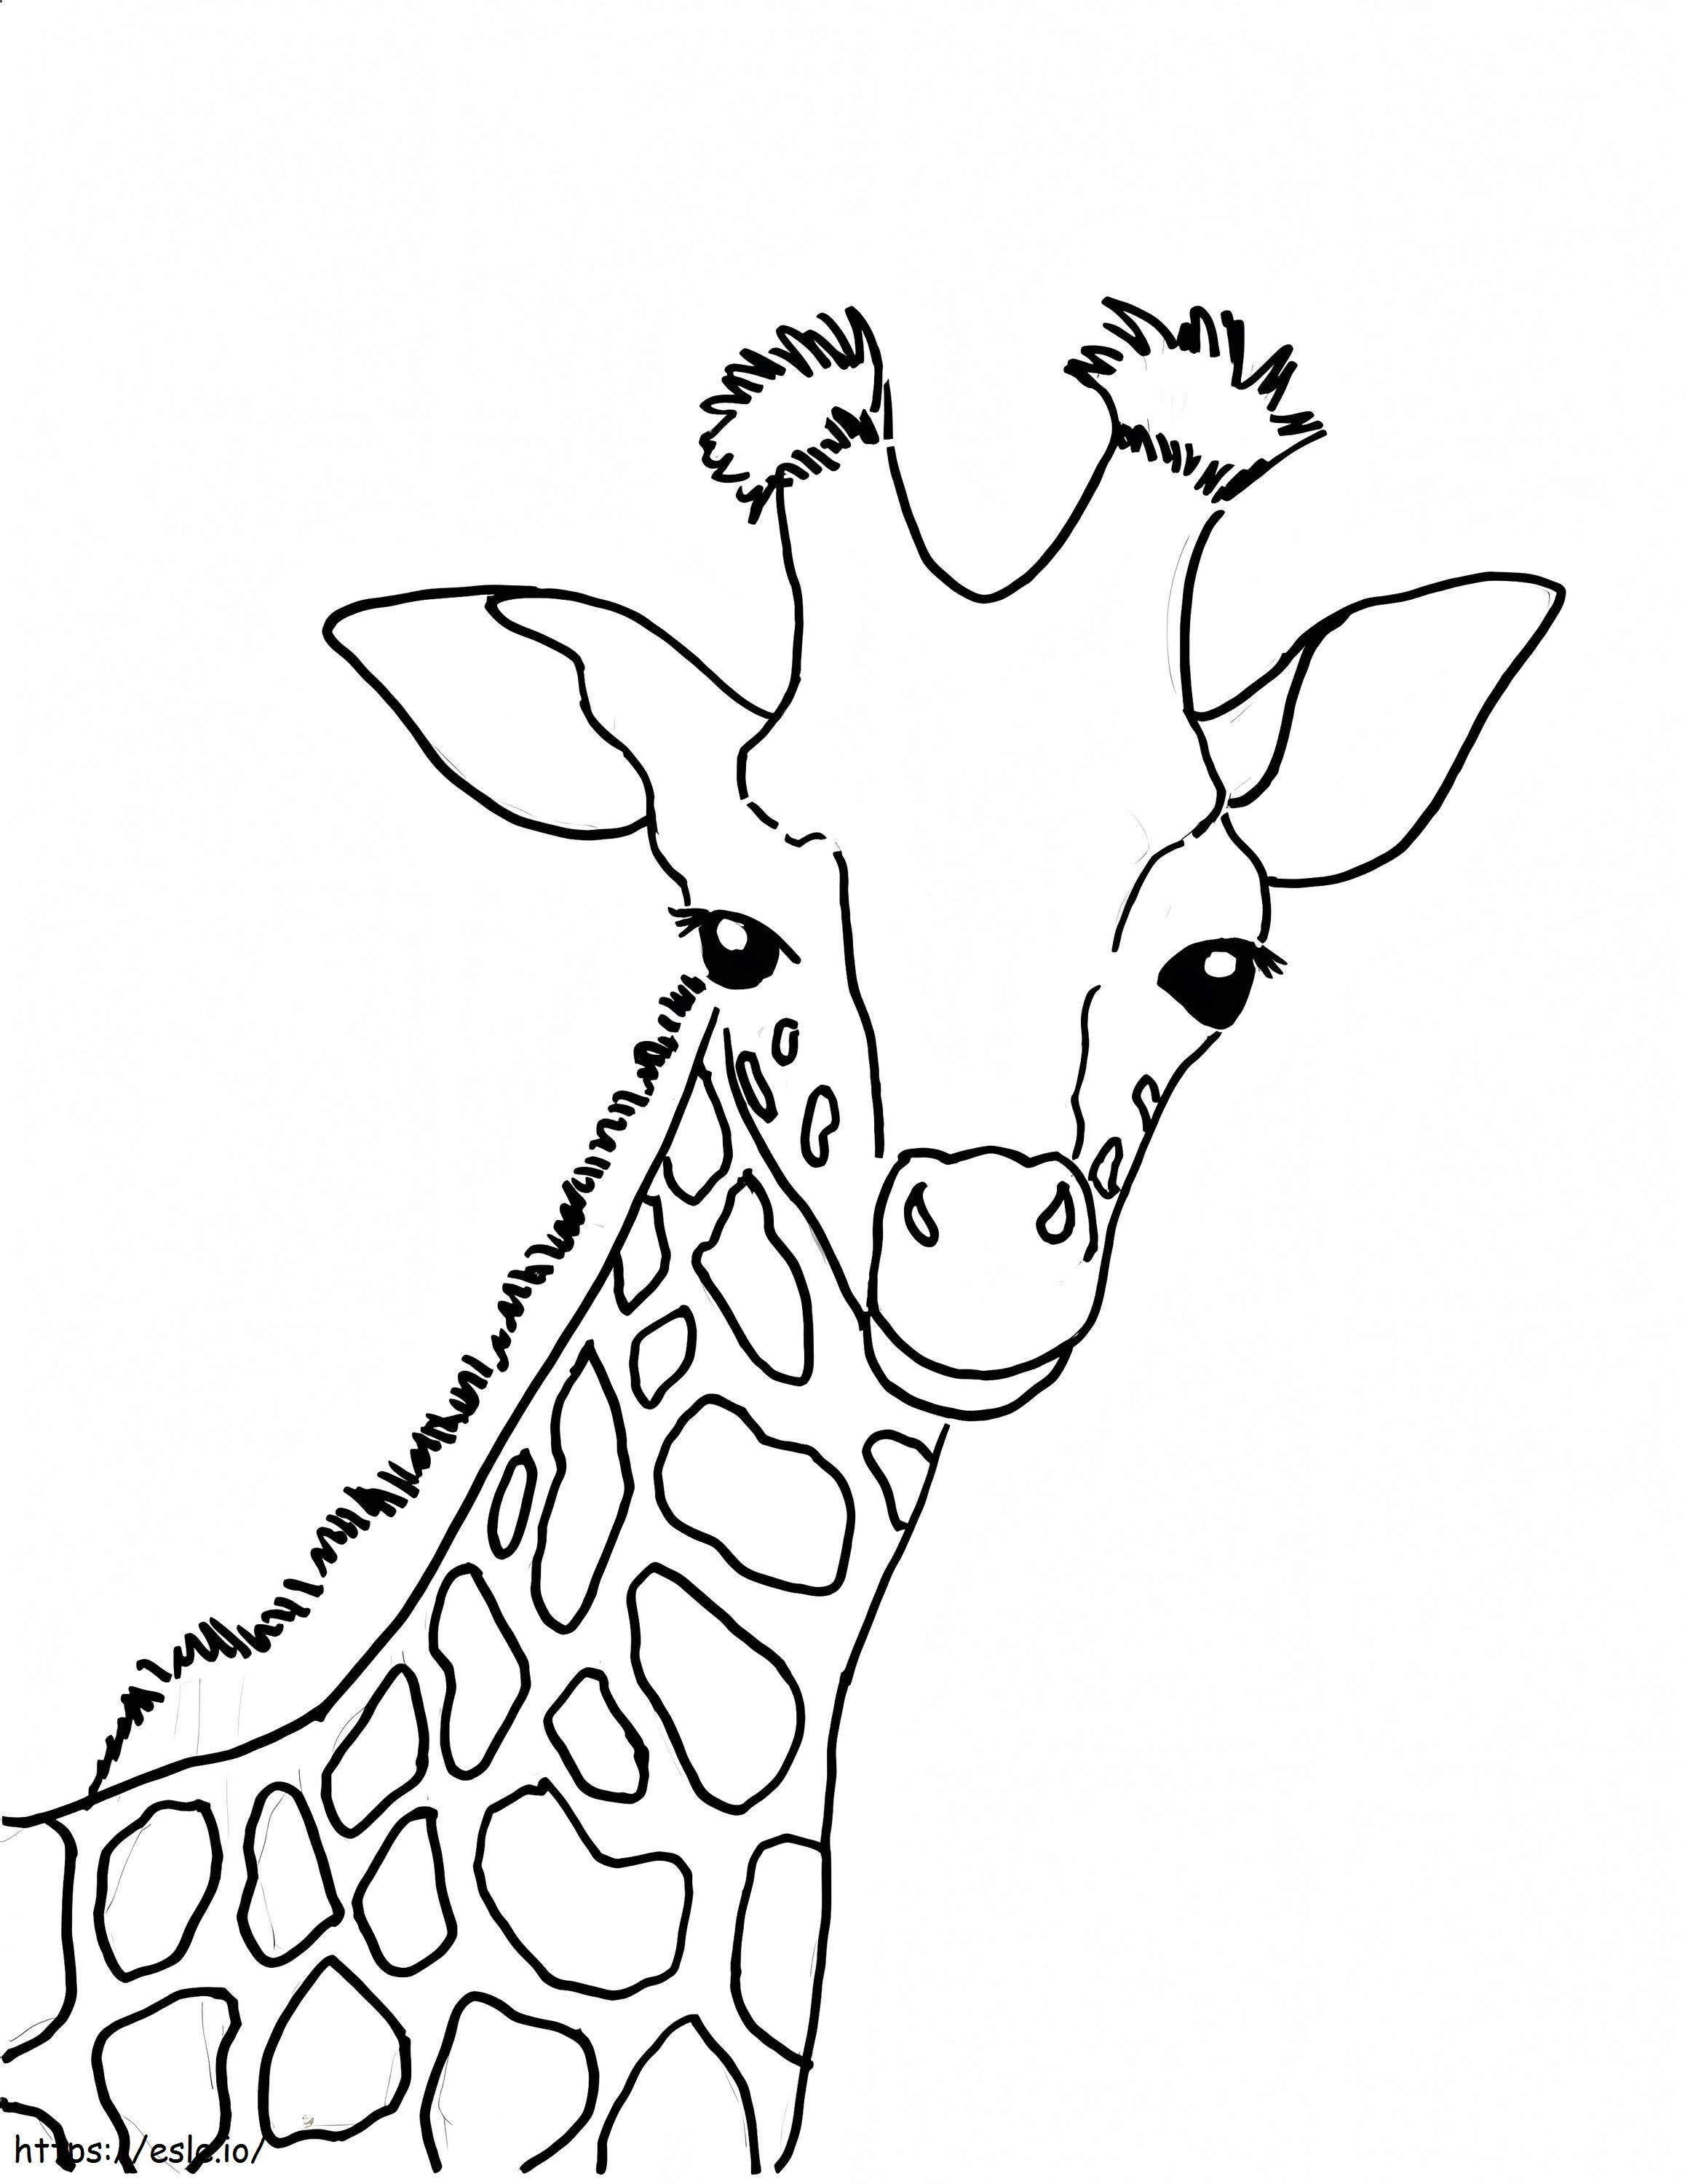 Giraffe Head coloring page